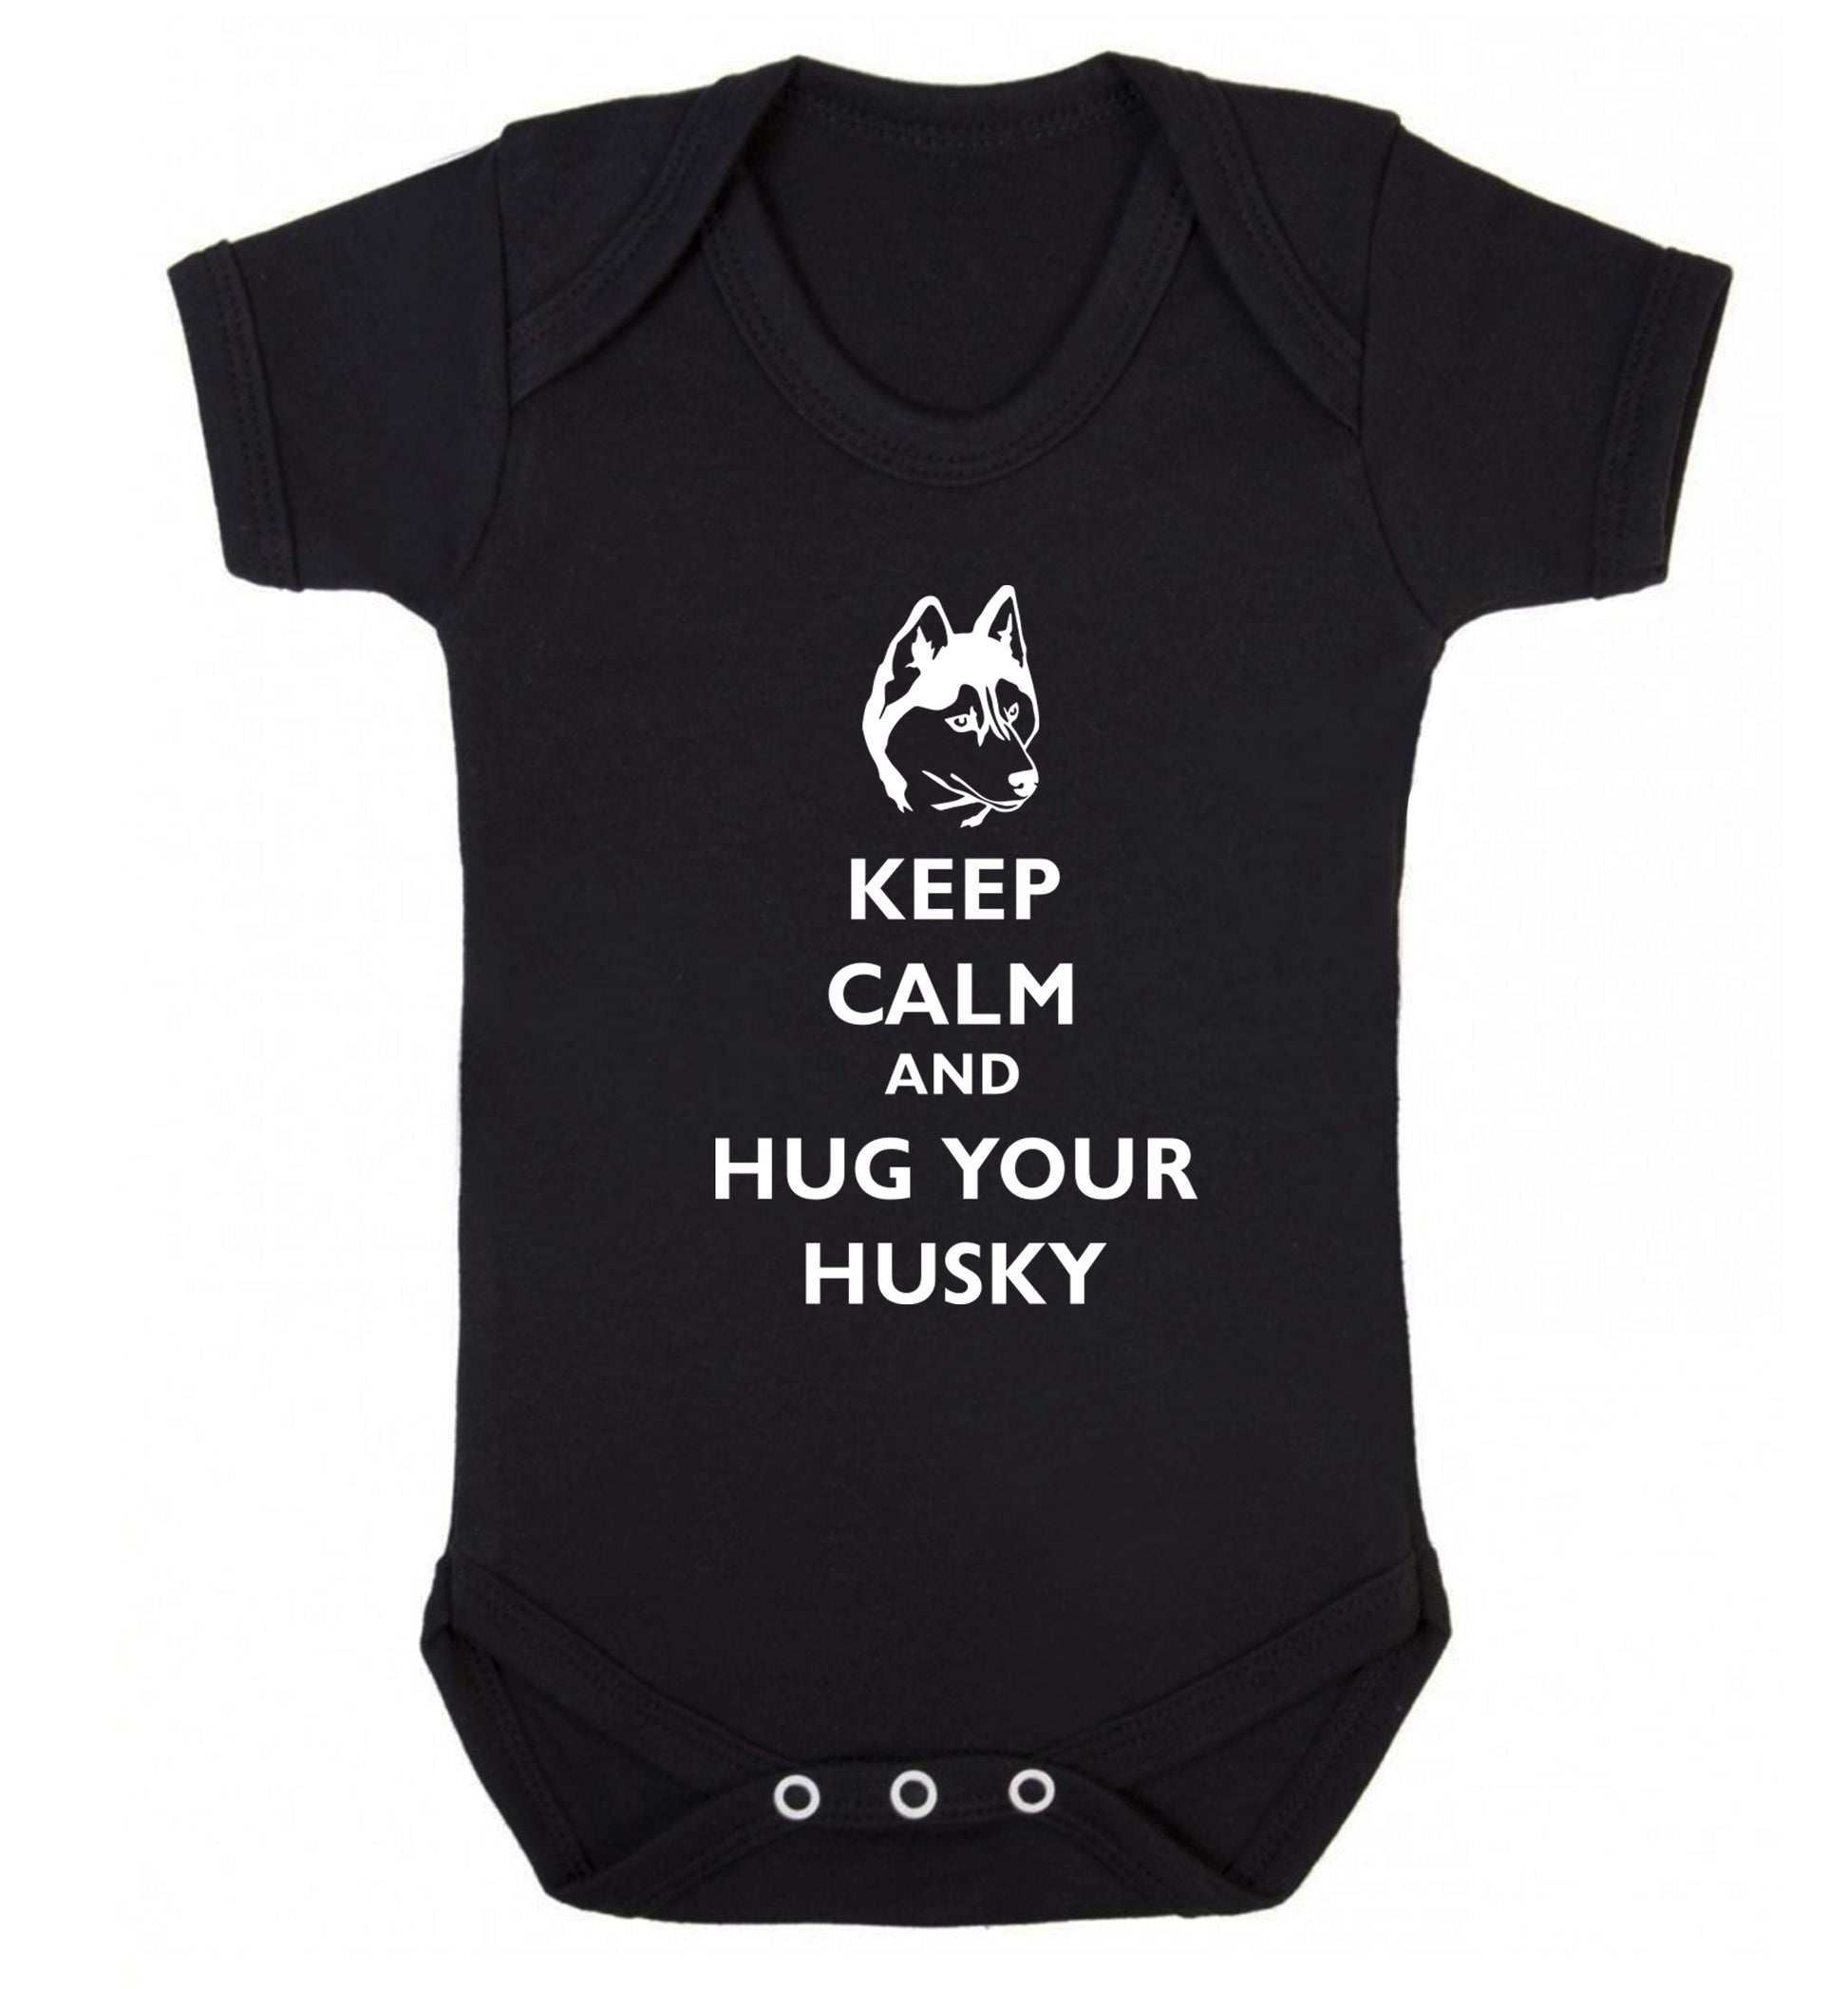 Keep calm and hug your husky Baby Vest black 18-24 months